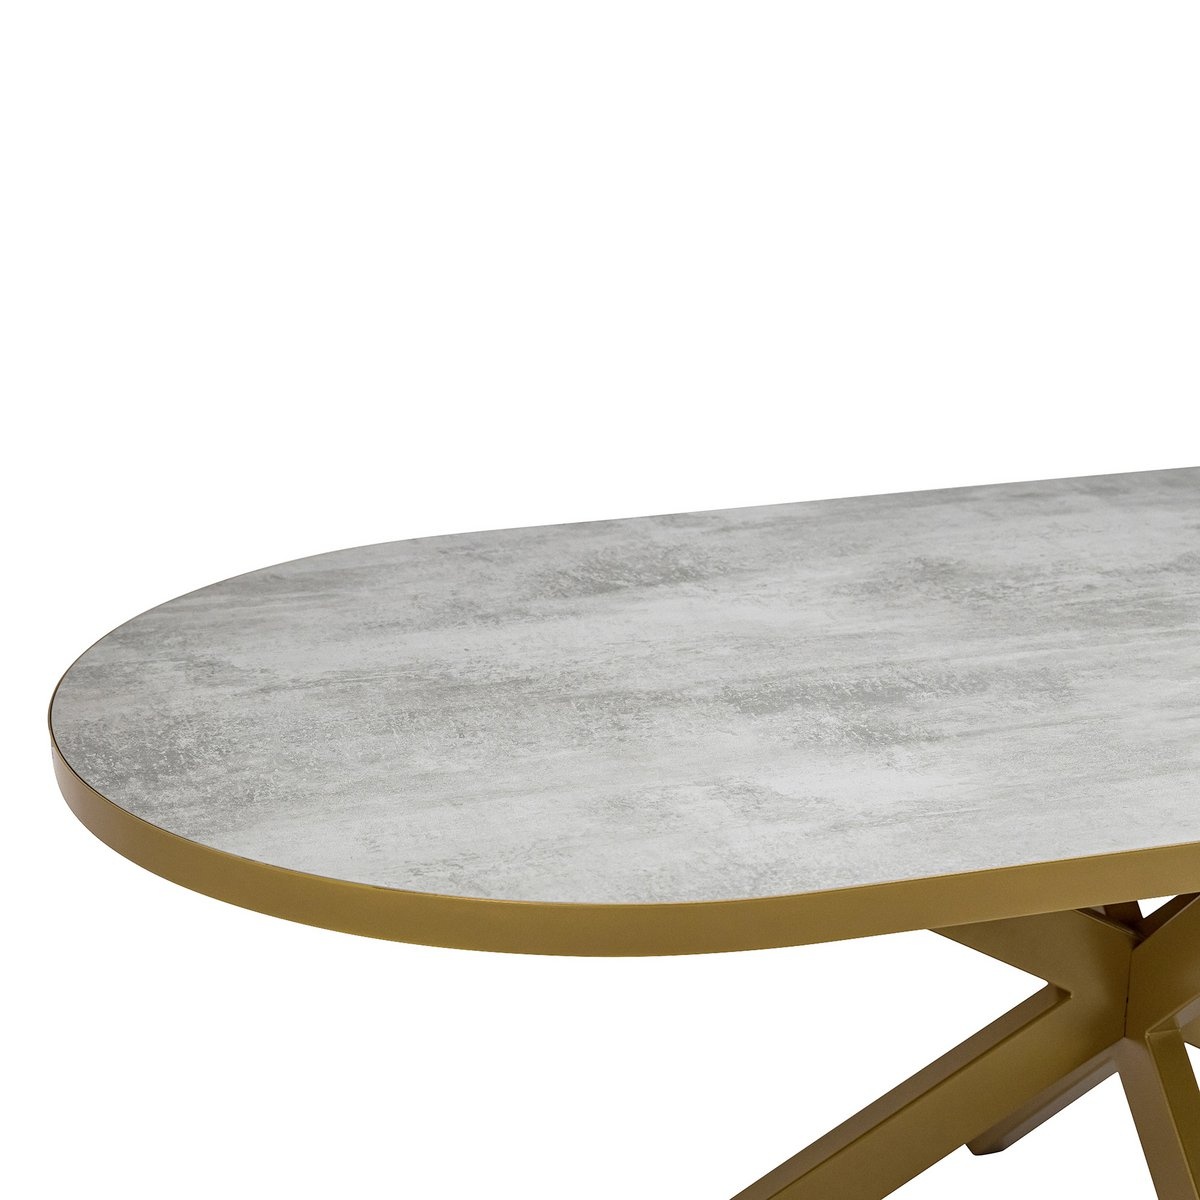 KantoormeubelenPlus Stalux Plat ovale eettafel 'Noud' 210 x 100, kleur goud / beton